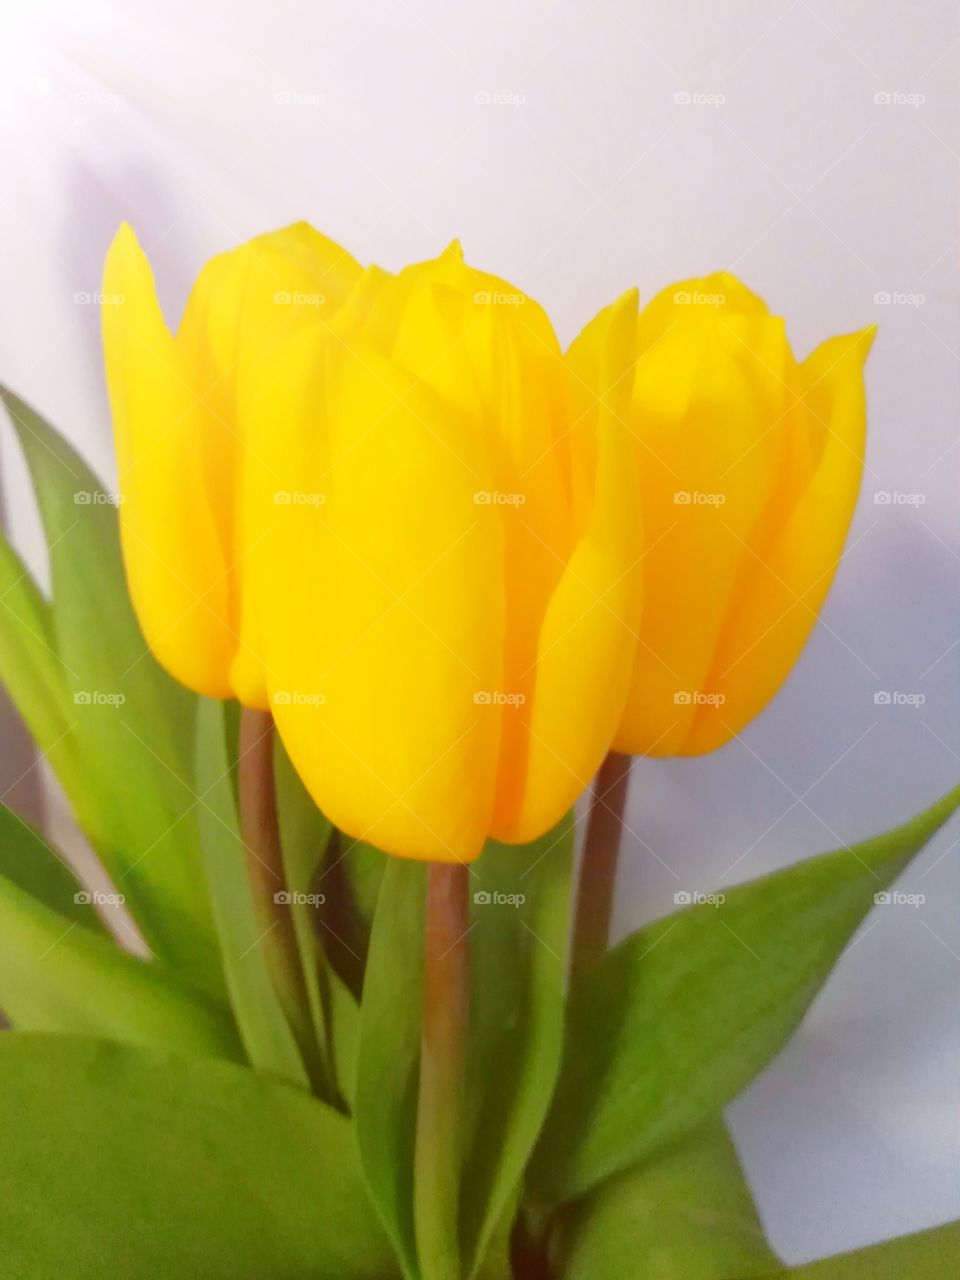 The yellow tulips.